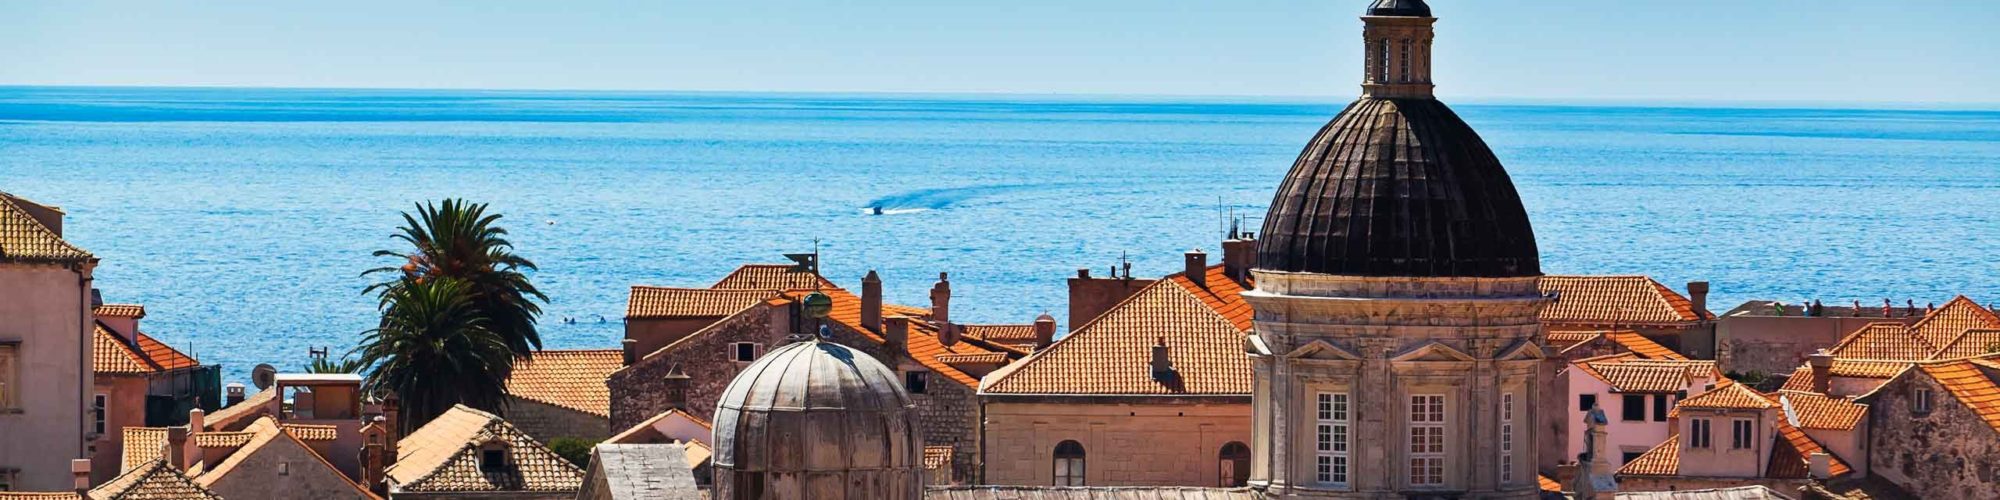 Dubrovnik travel agents packages deals